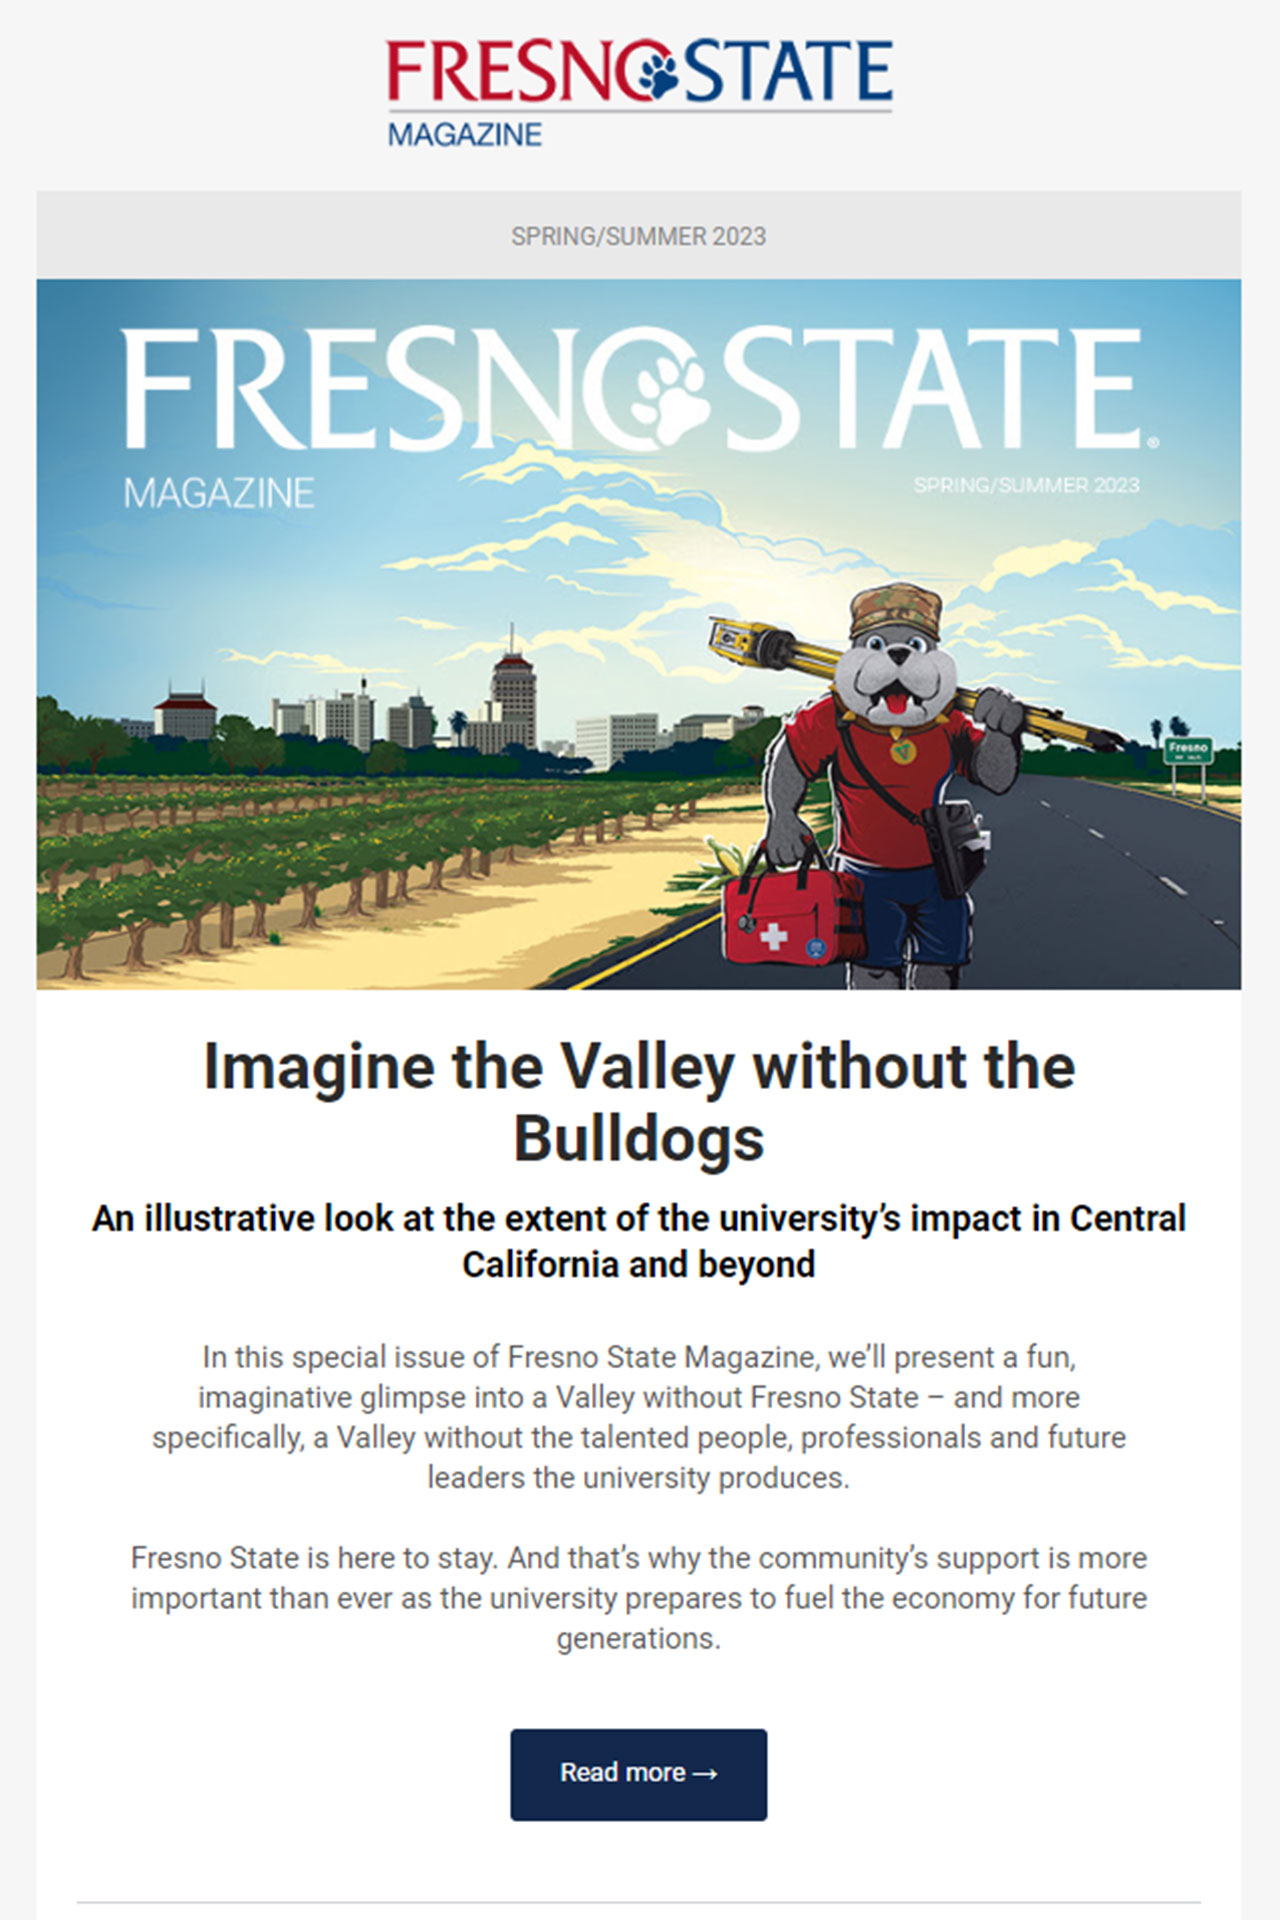 Fresno State Magazine